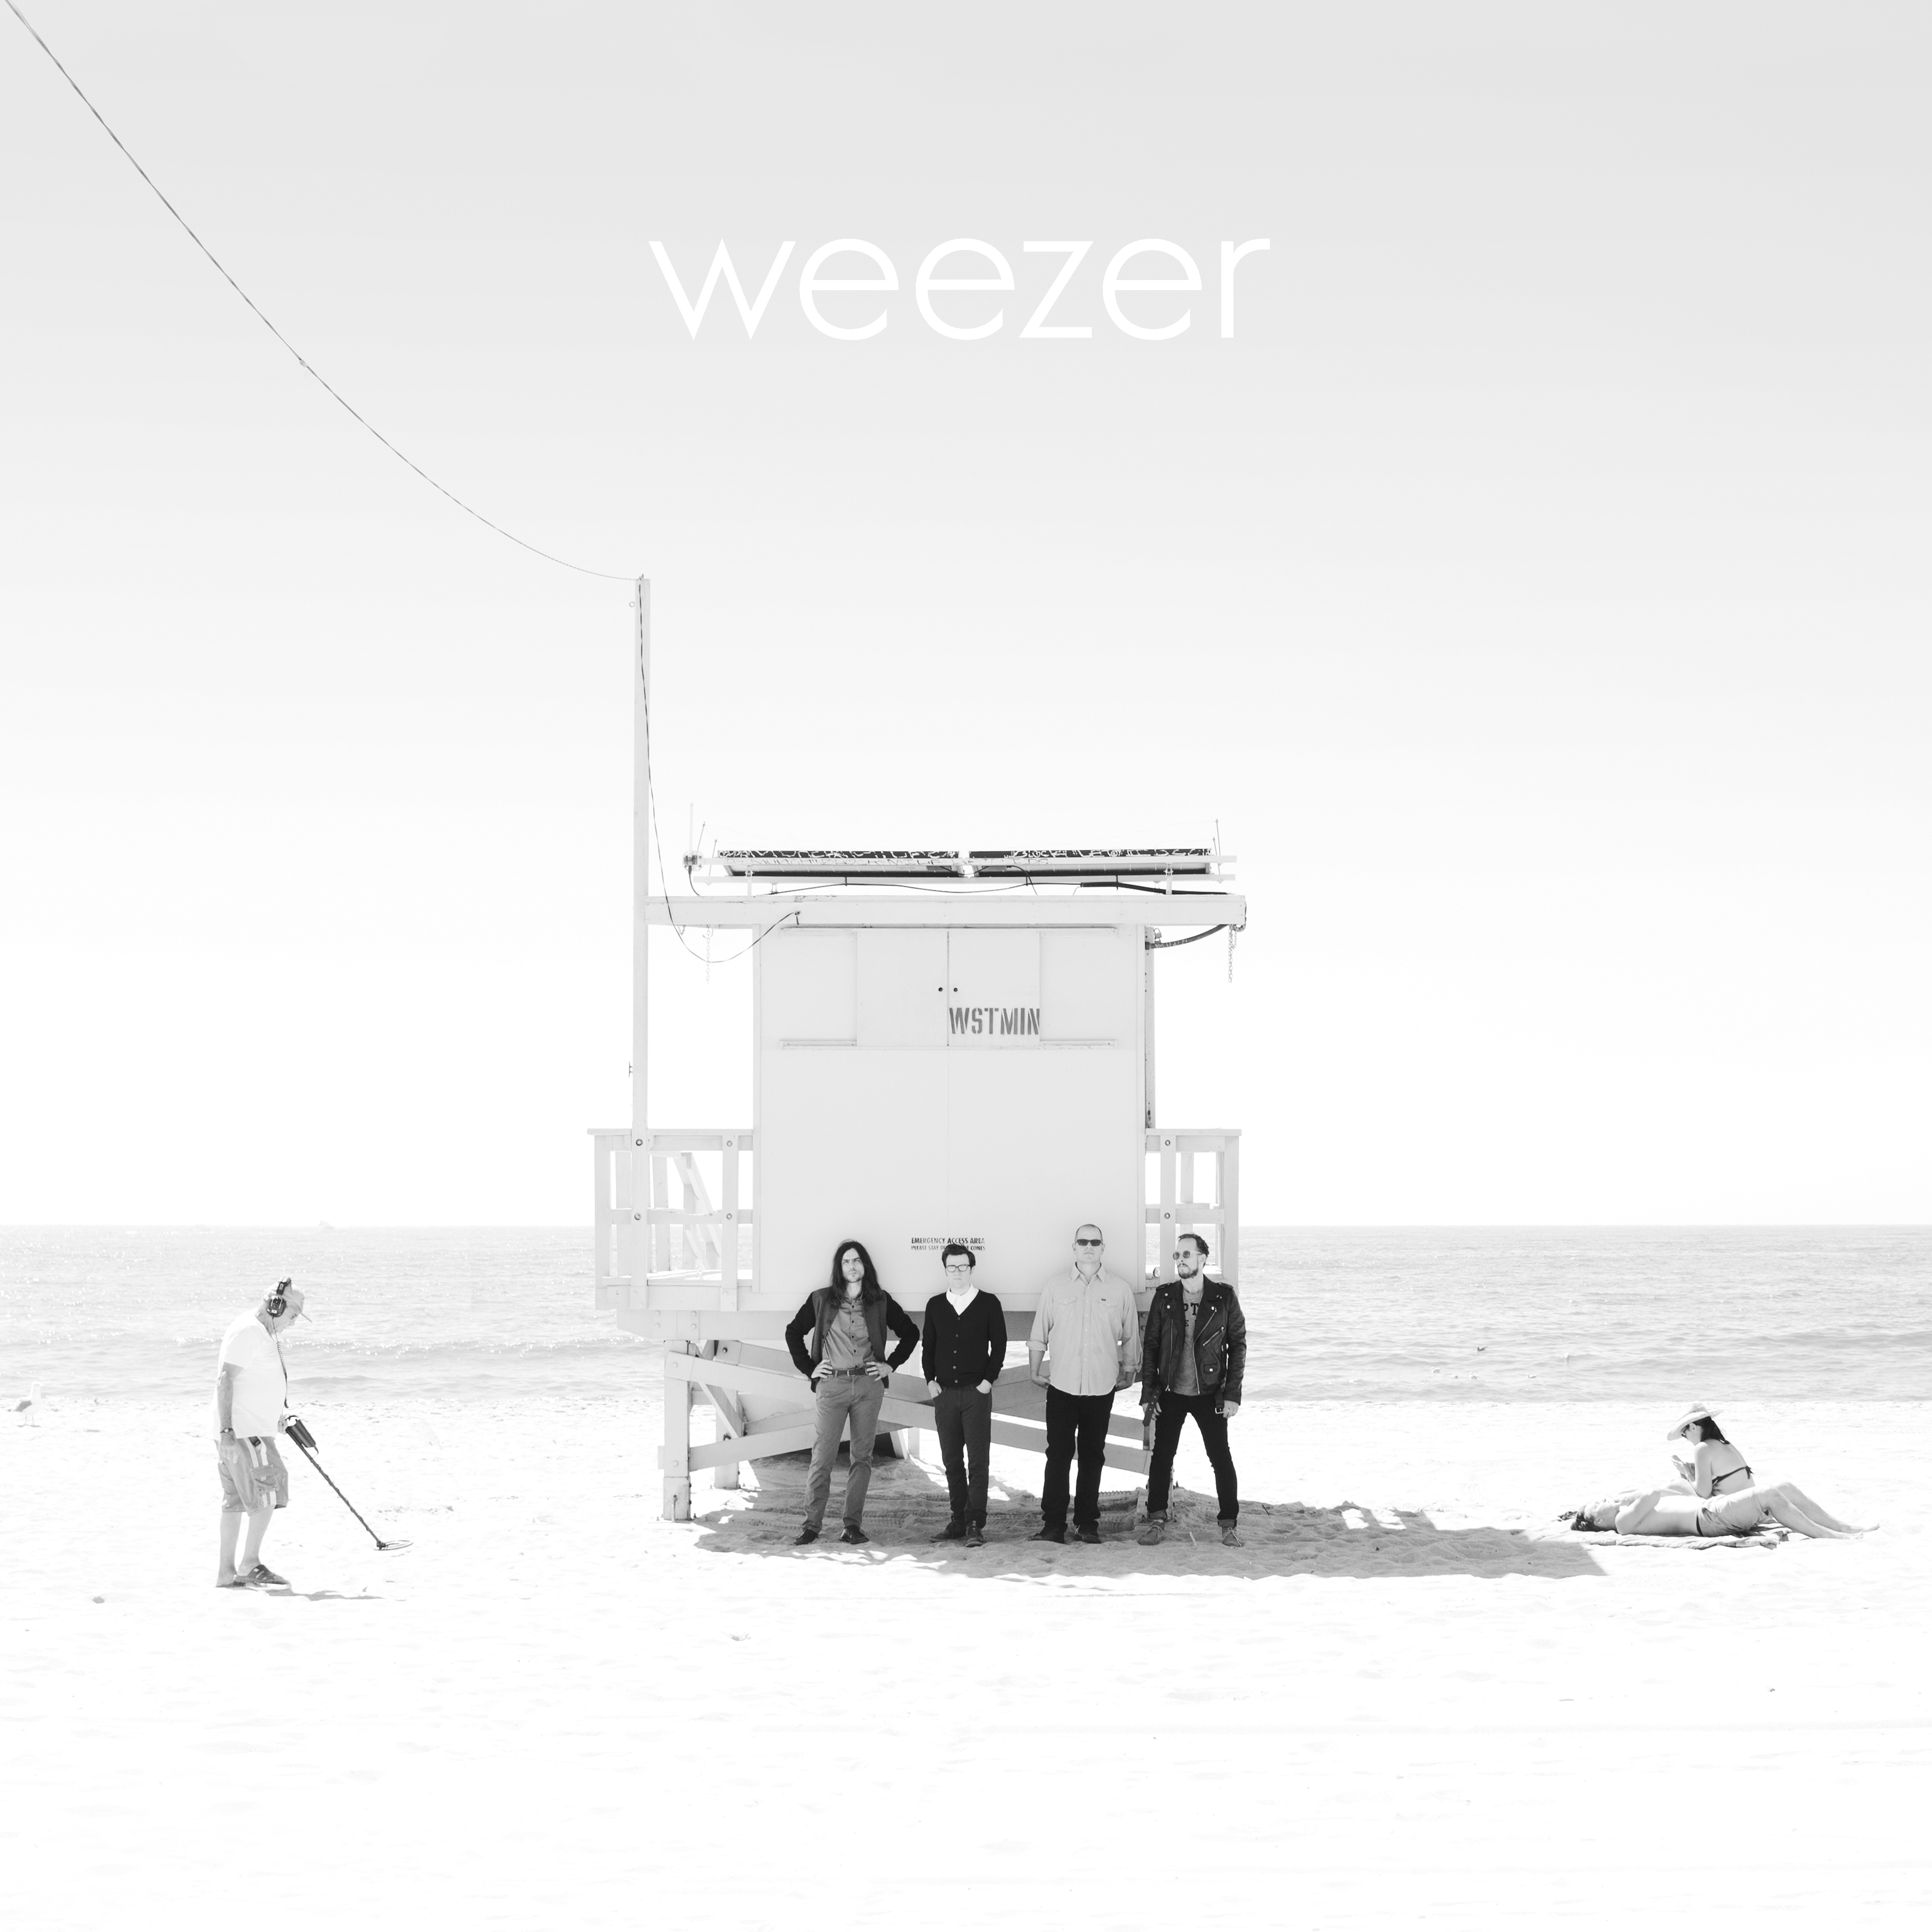 Weezer: esce oggi il nuovo album!